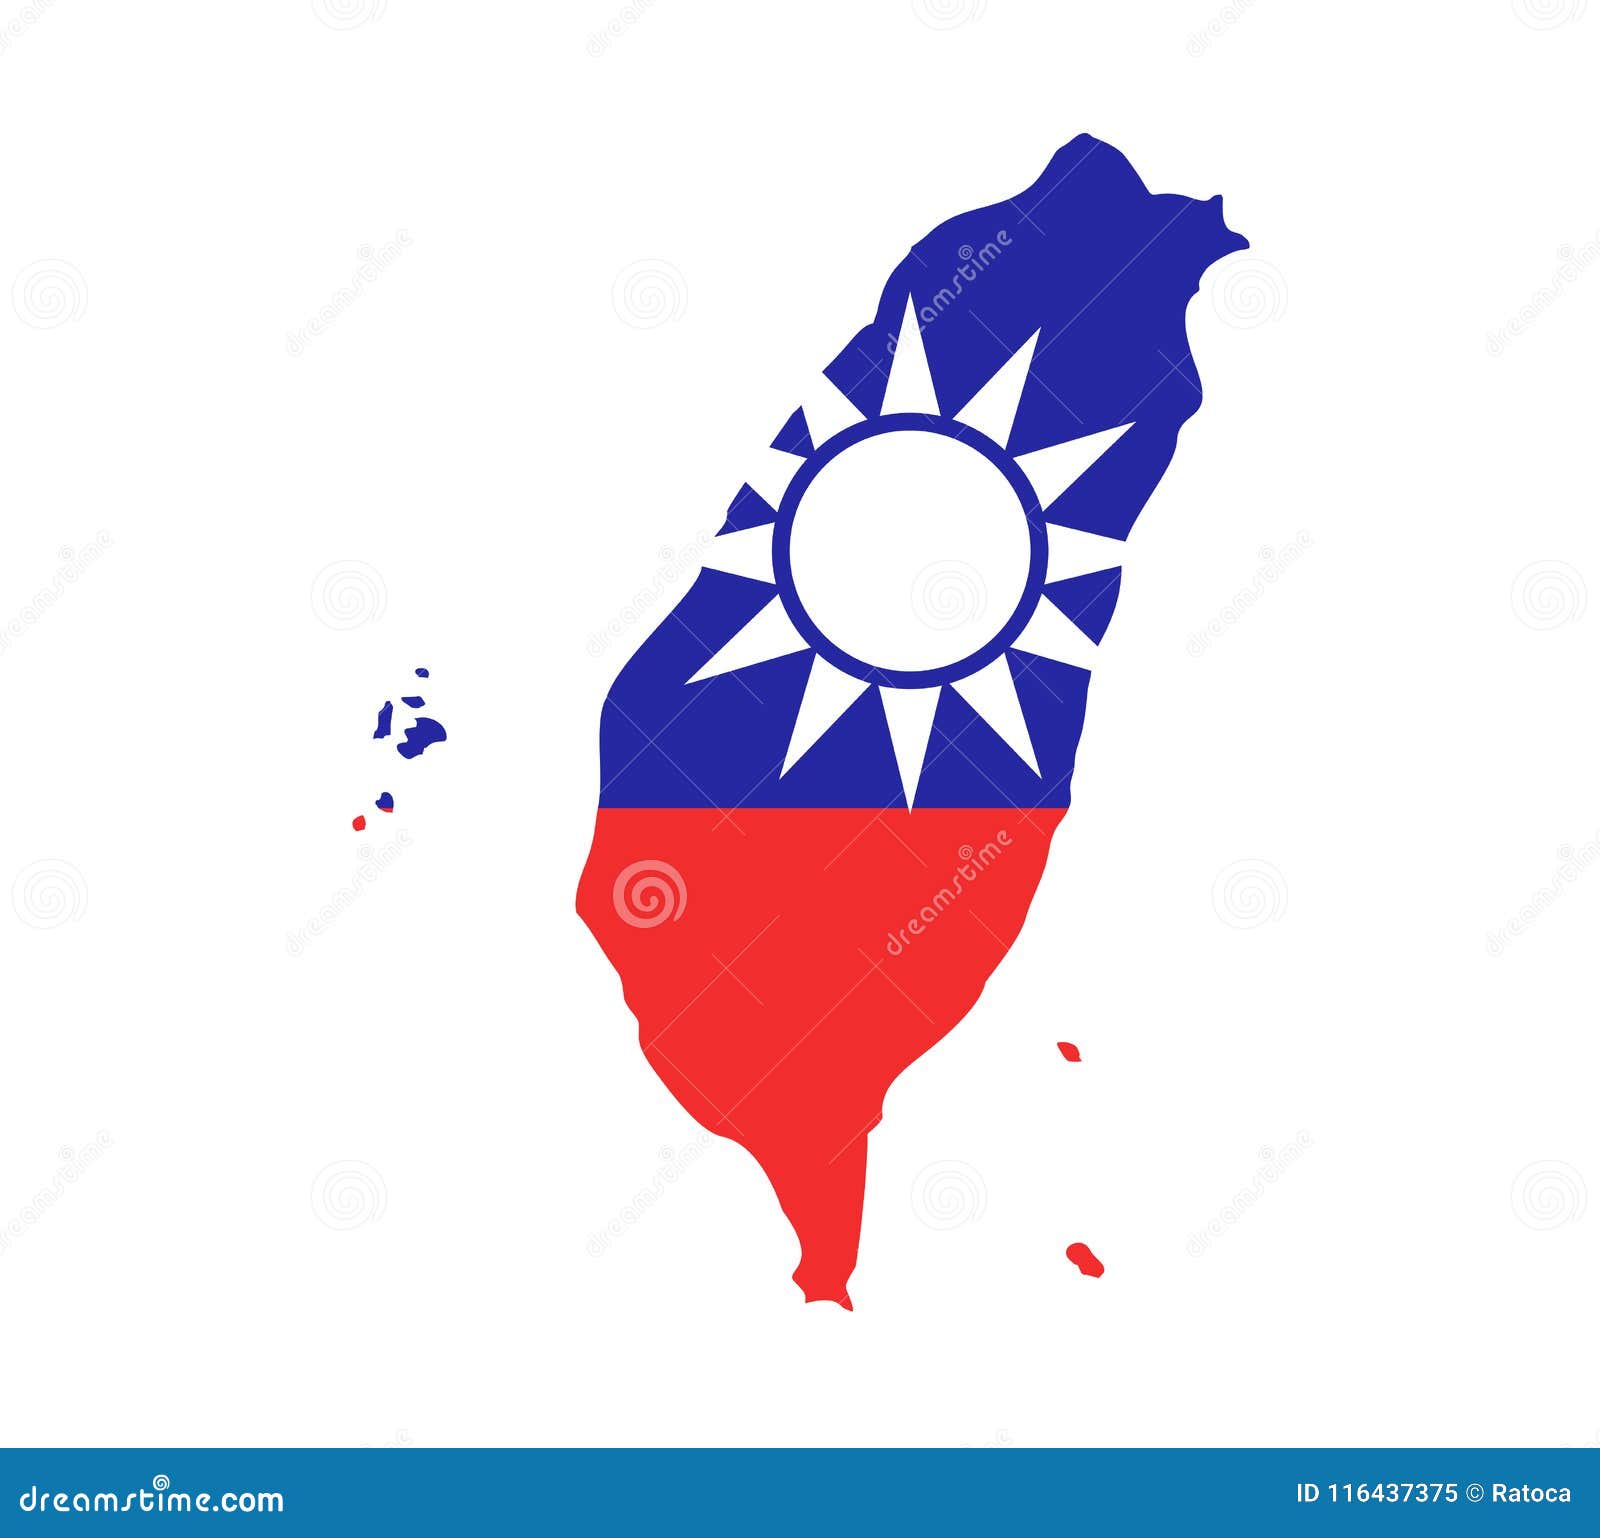 Flag of Taiwan, 2009 | ClipArt ETC